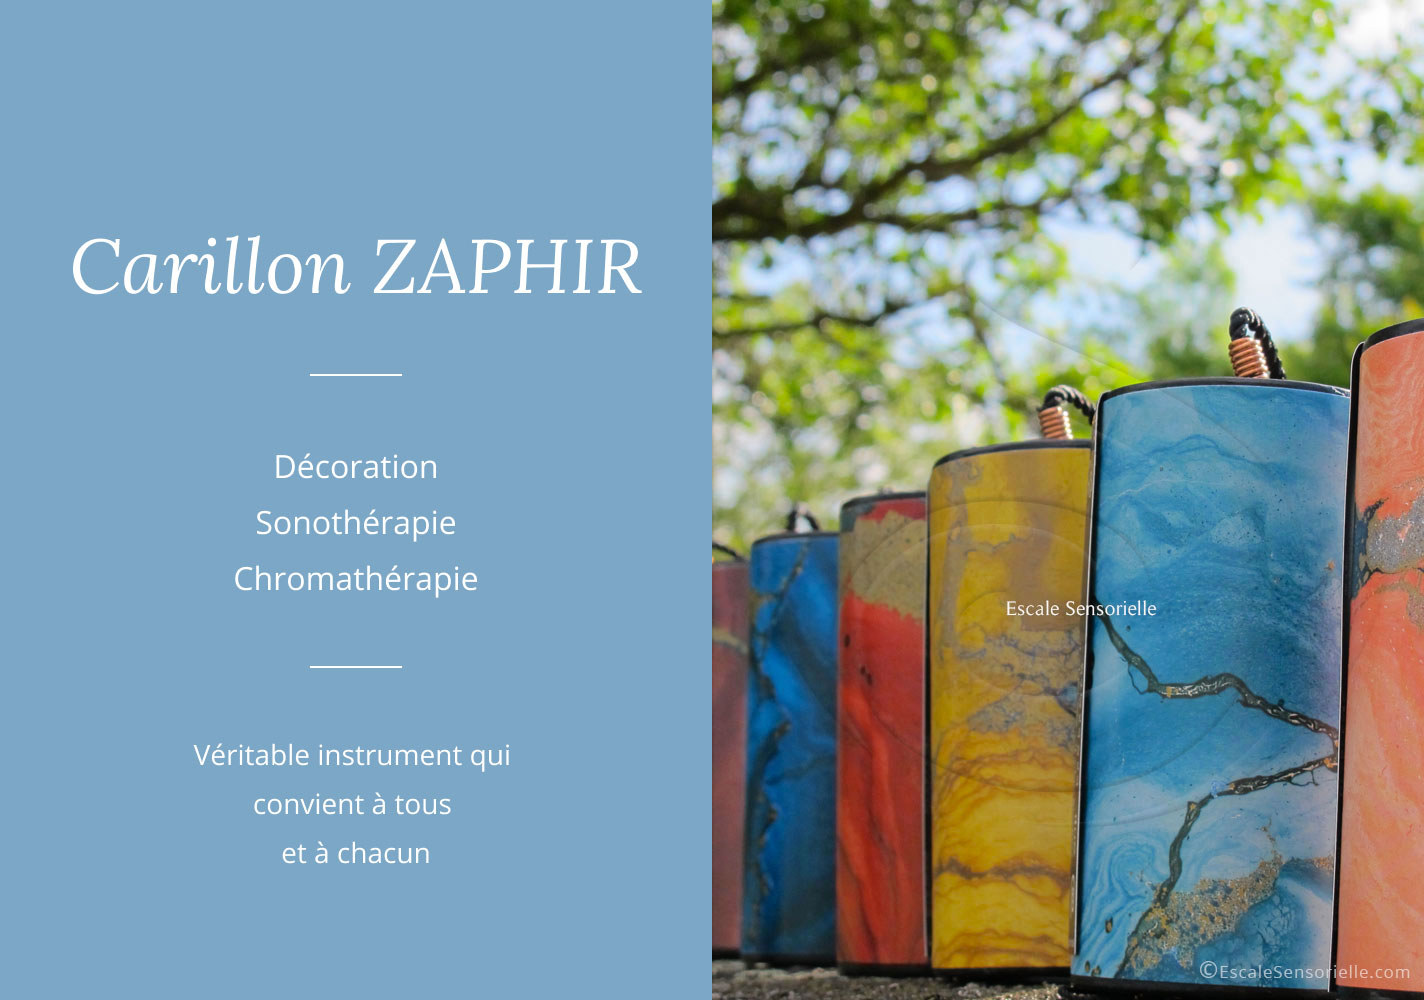 Carillons éoliens Zaphir accordés